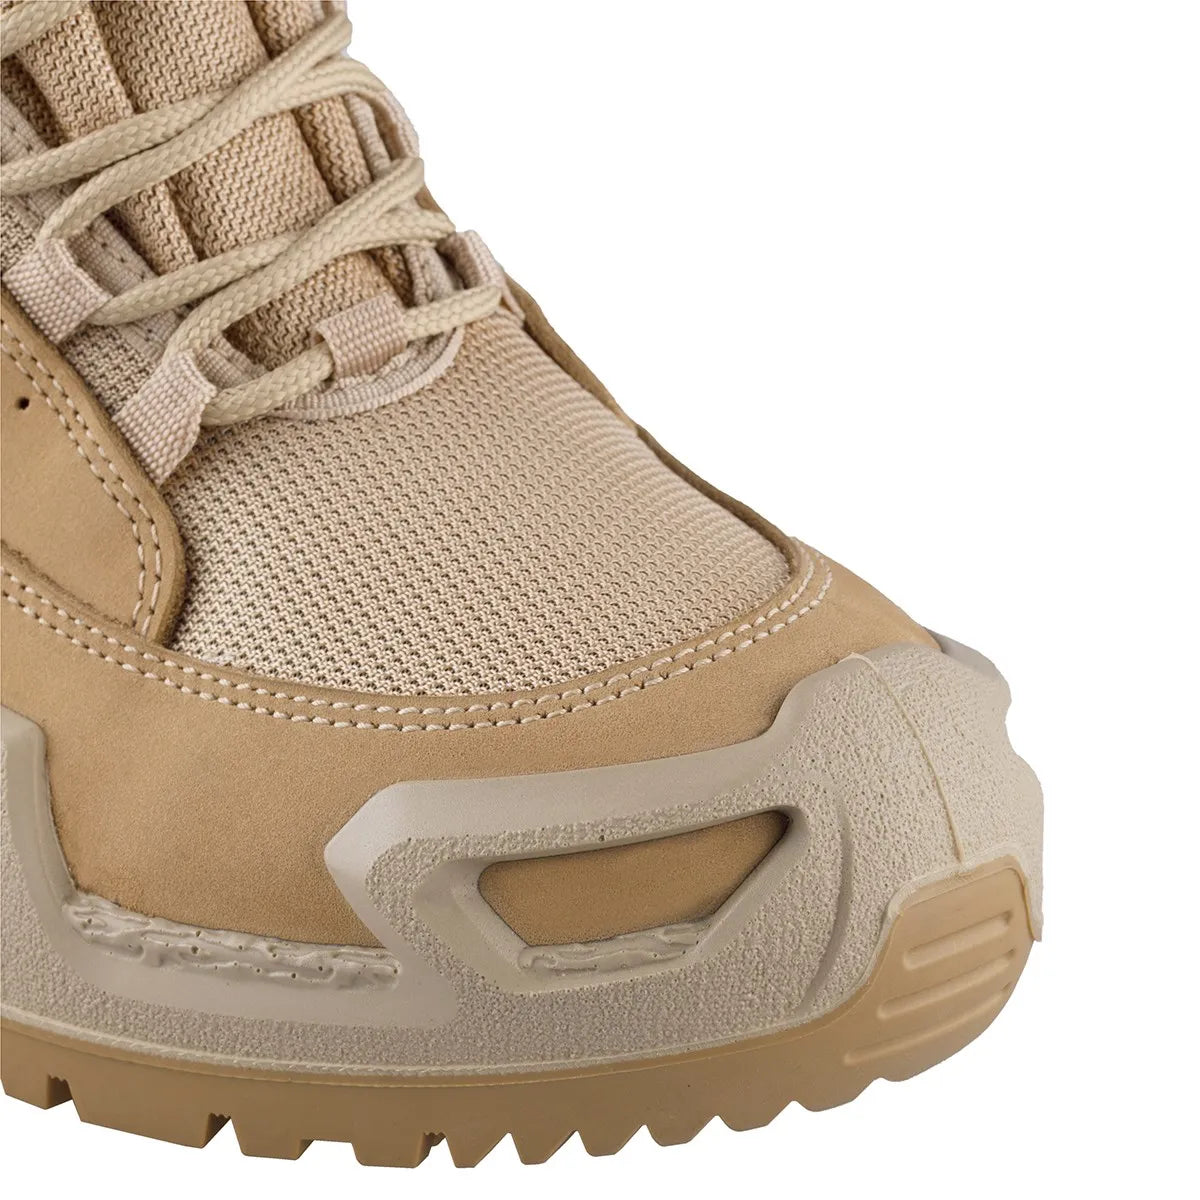 Vaneda 1191 Pro Mid Beige Tactical Boots Waterproof Breathable Nubuck Outdoor Men Women Hiking Shoes Hunting Drytex Light weight